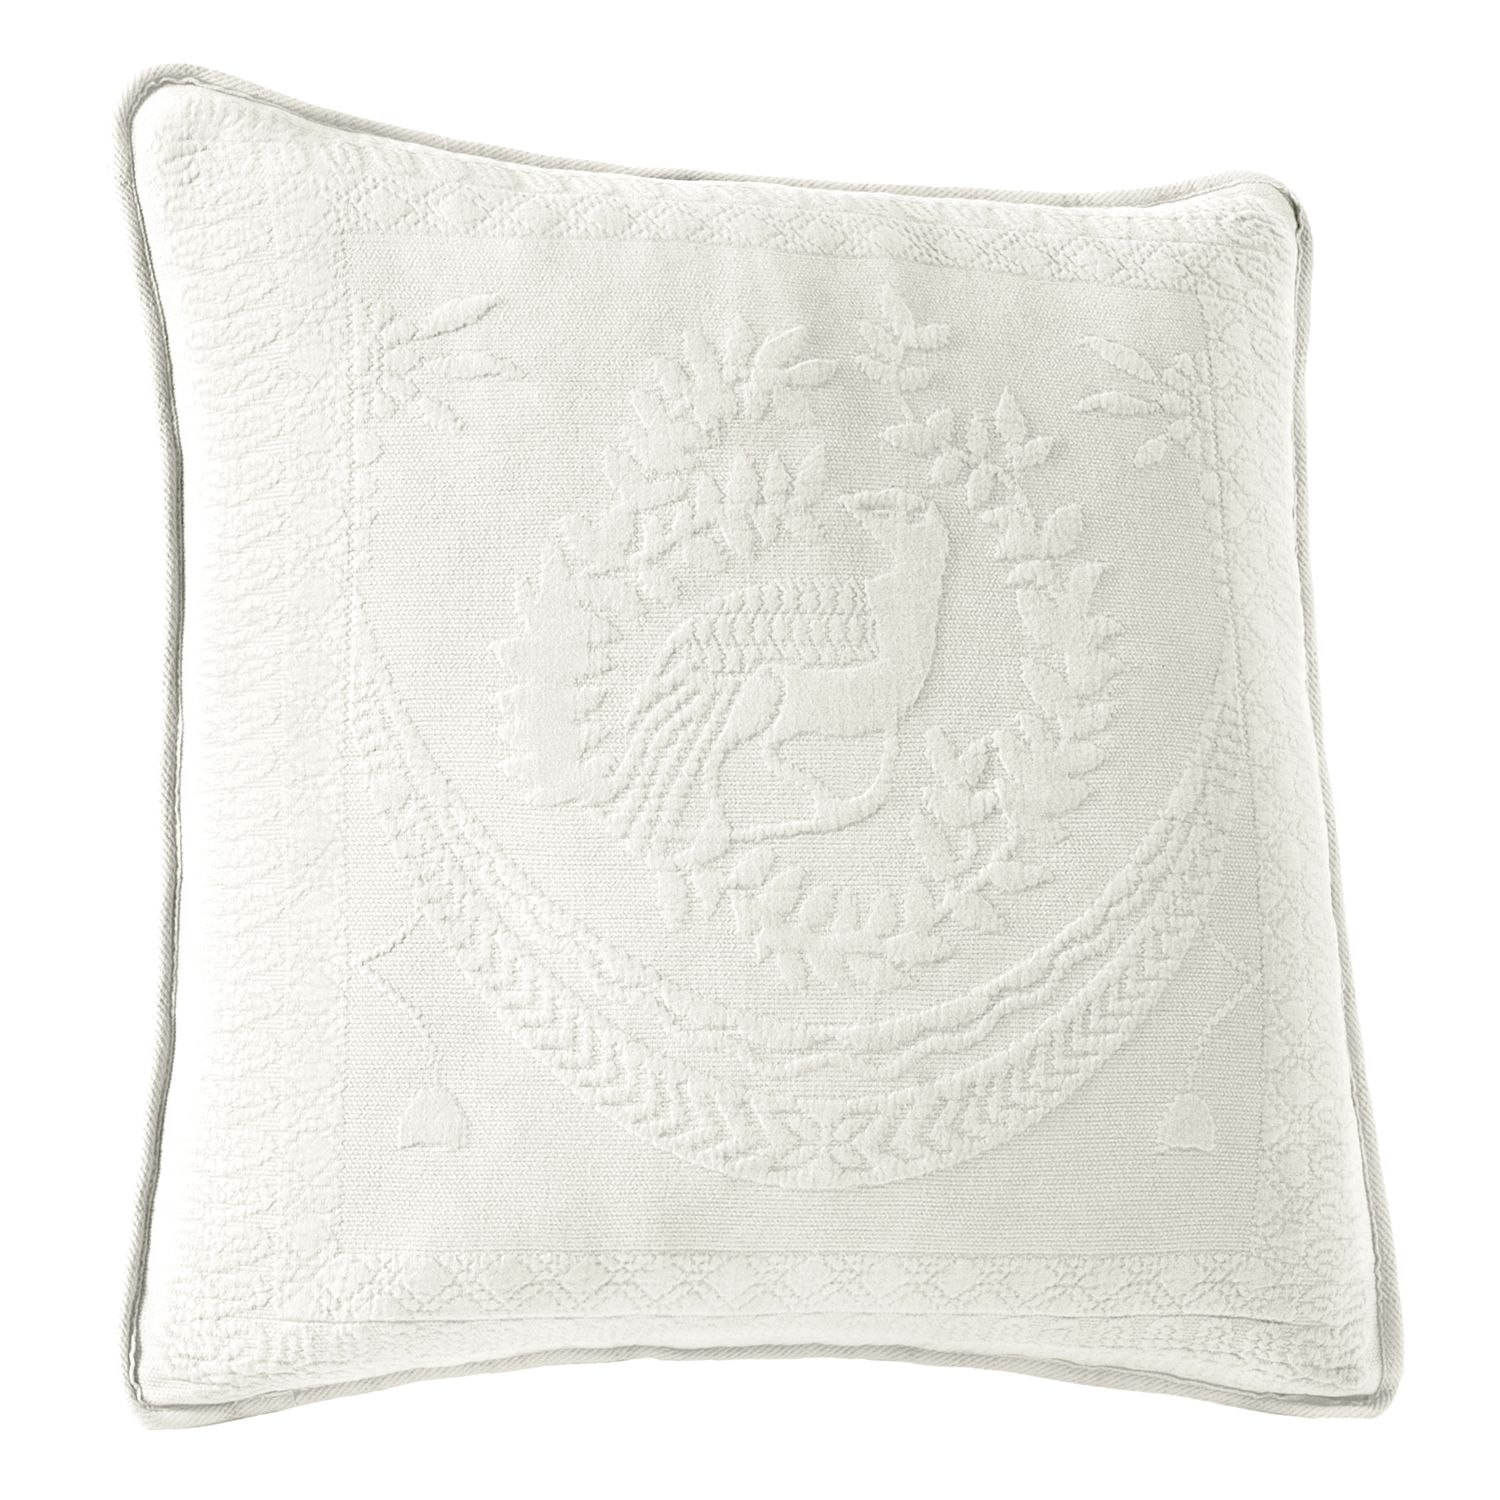 Historic Charleston King Charles Matelasse Collection 20 inch Pillow